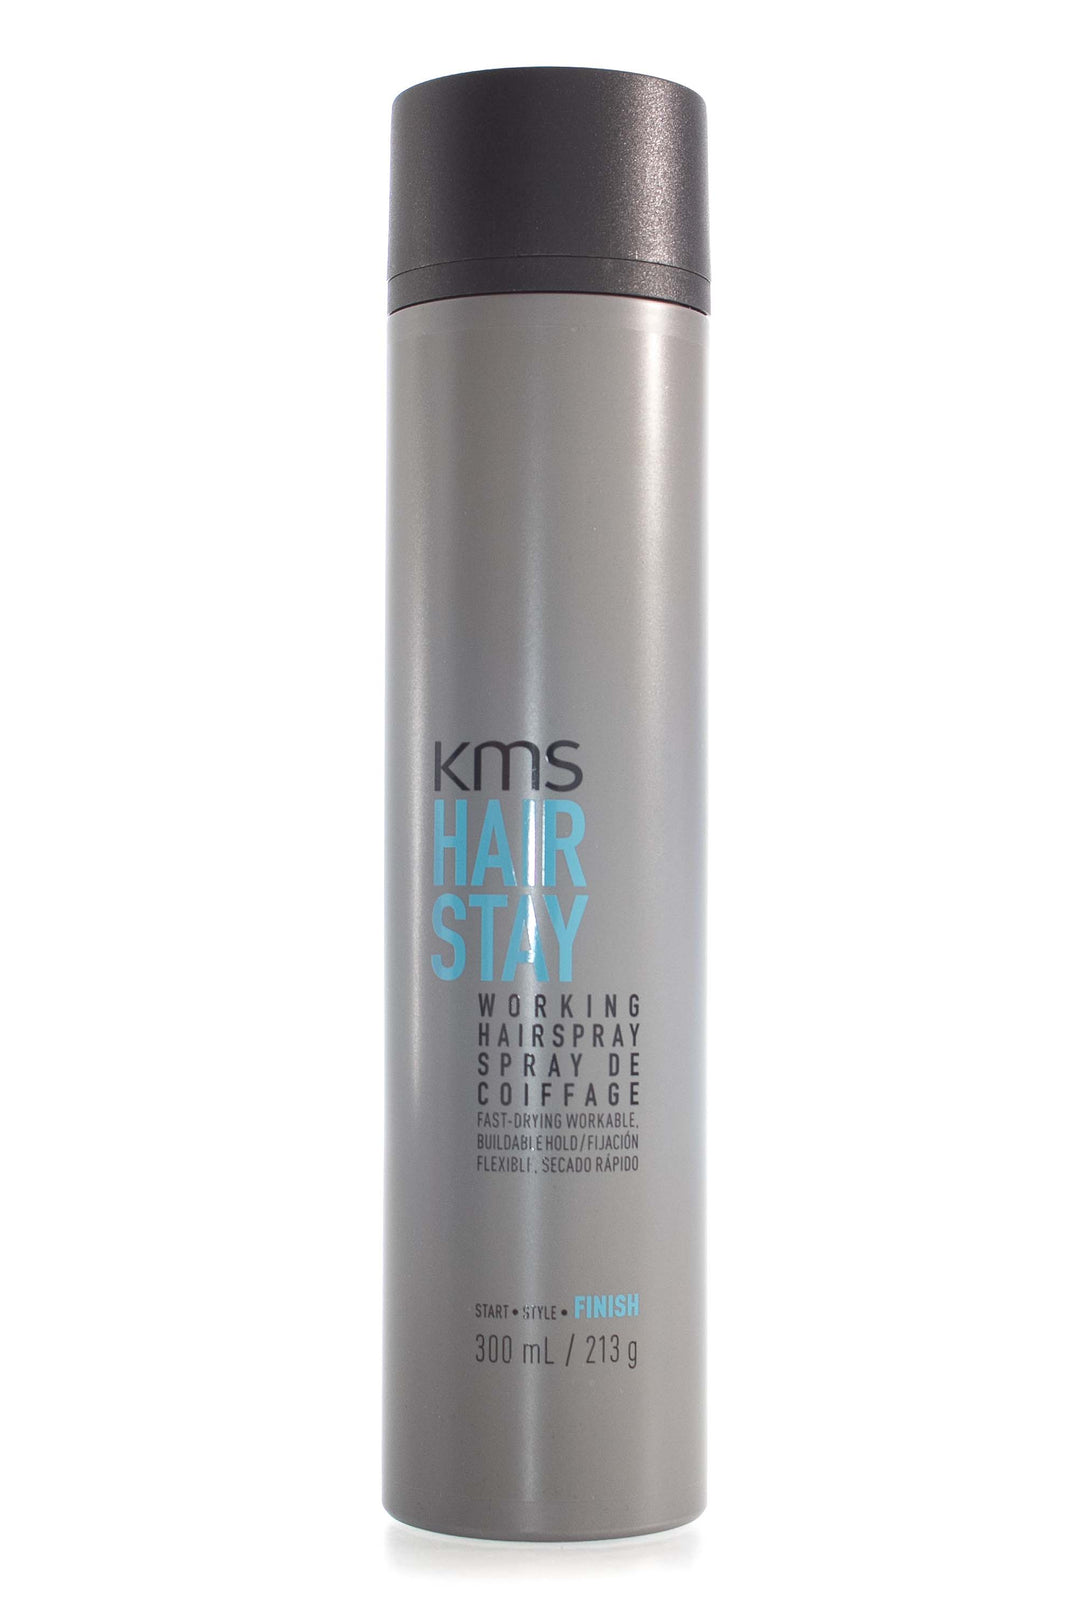 kms-hairstay-working-spray-300ml